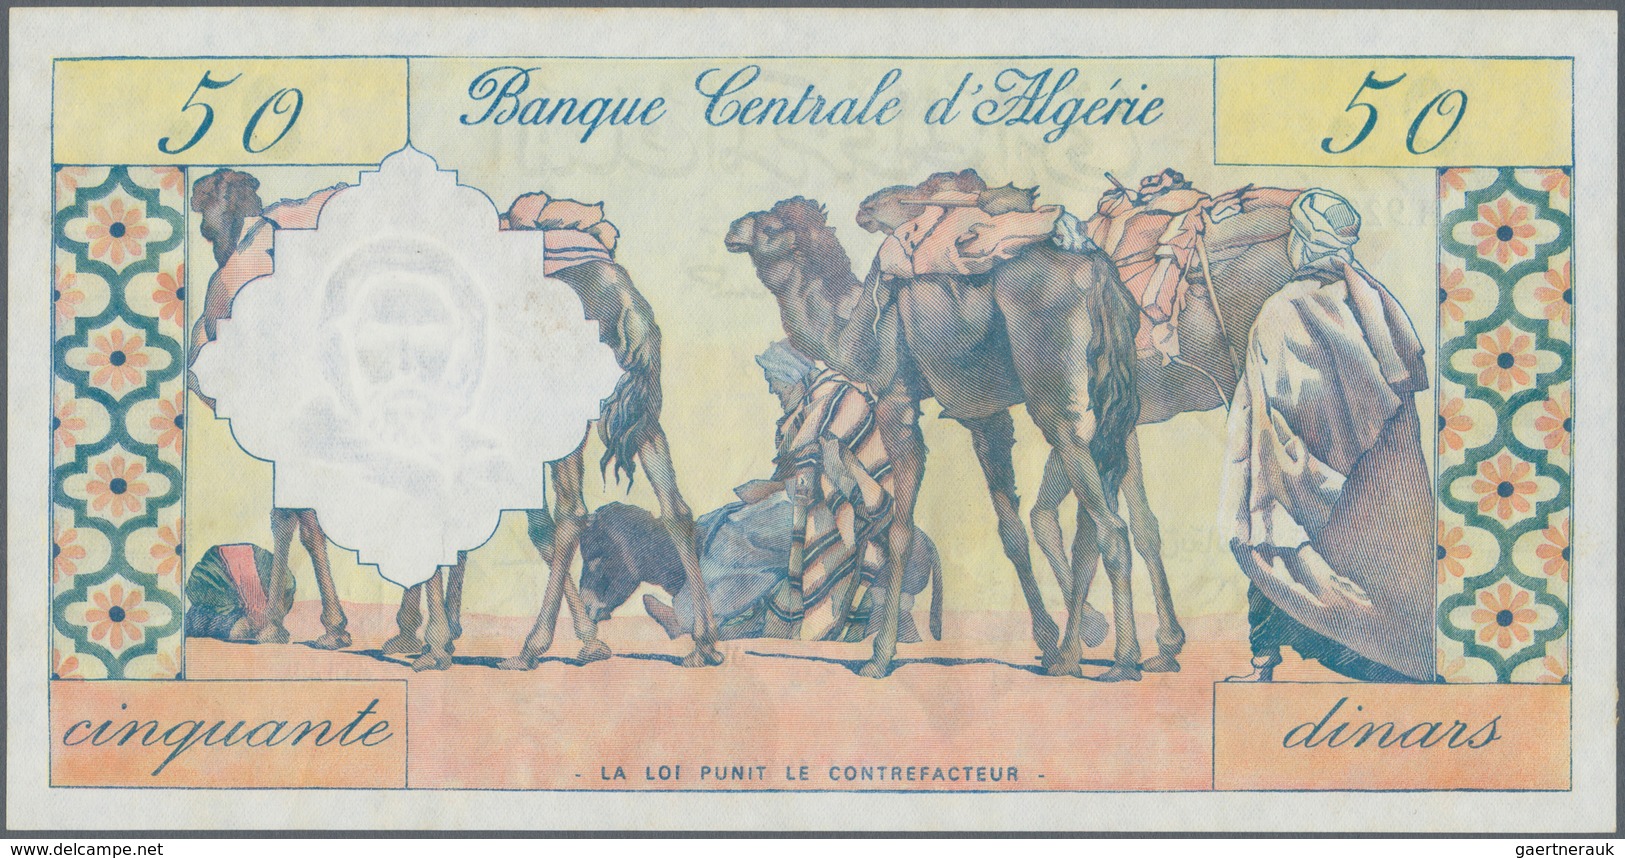 Algeria / Algerien: 50 Dinars 1964 Banque De L'Algerie P.124, Beautiful Design Banknote, More Rarely - Argelia